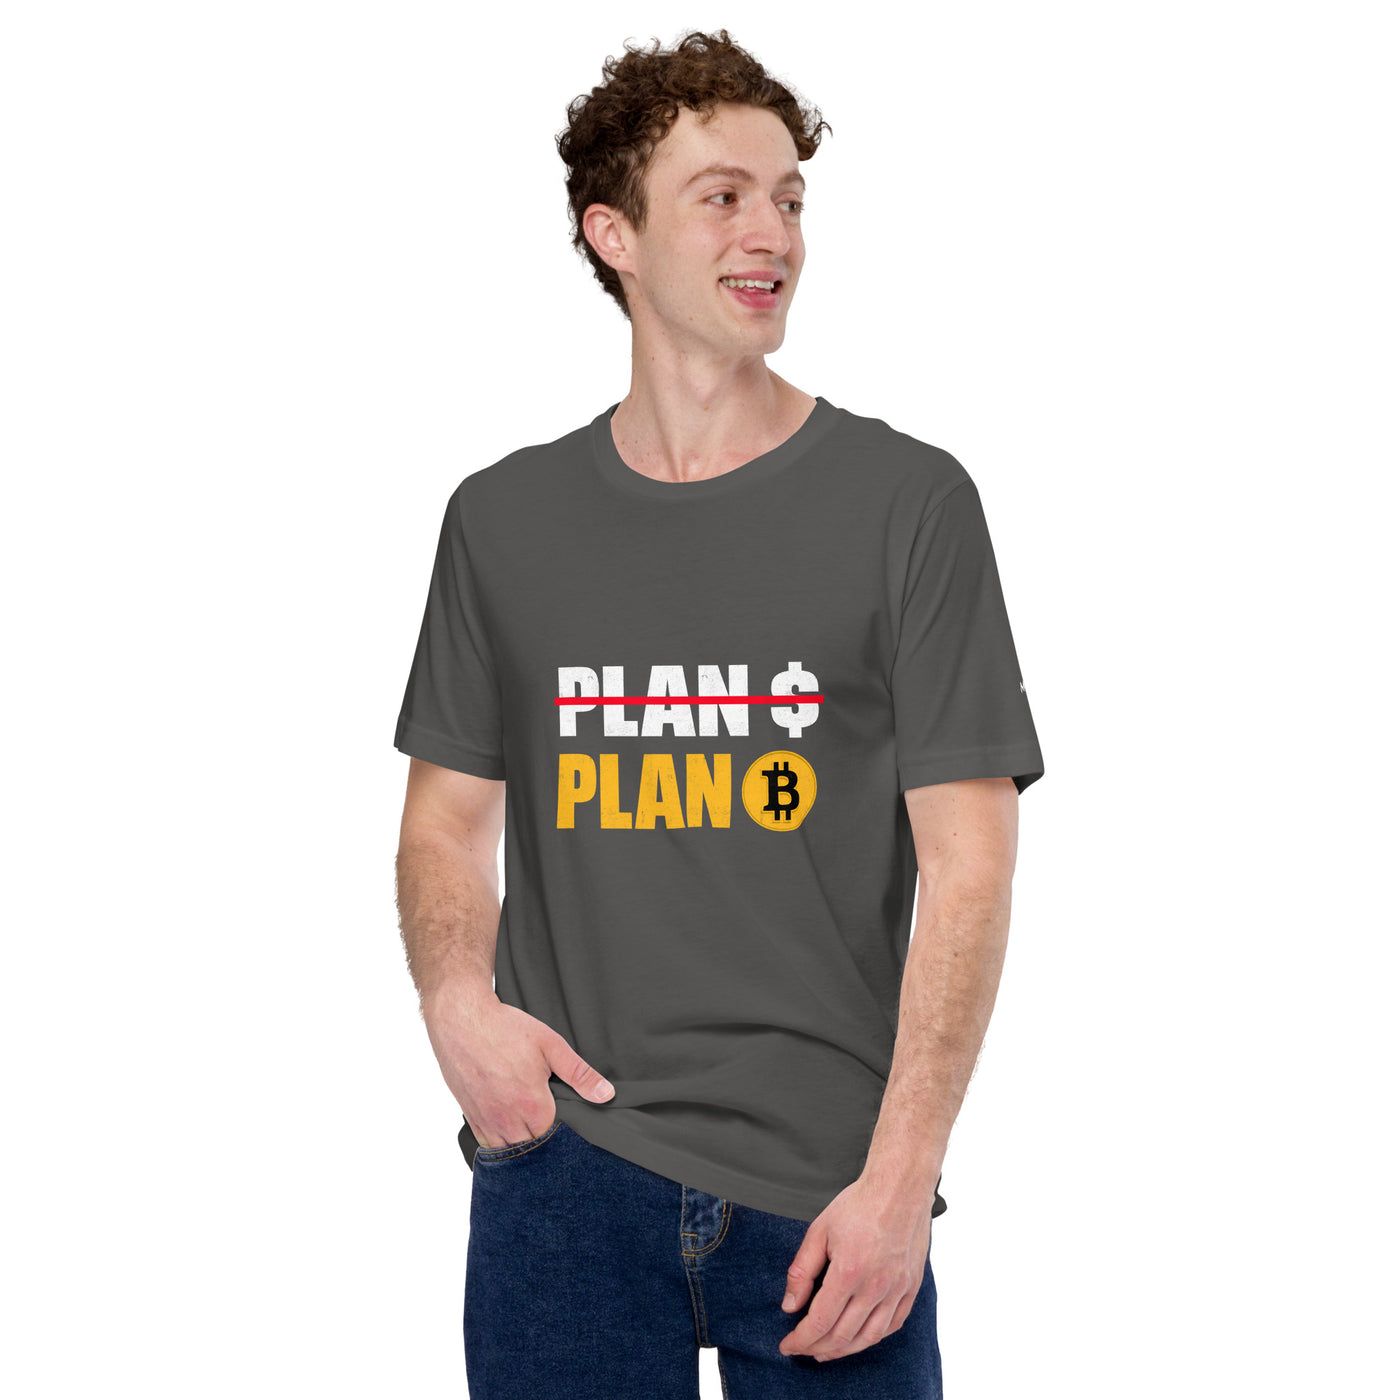 No Plan $, but Plan Bitcoin - Unisex t-shirt